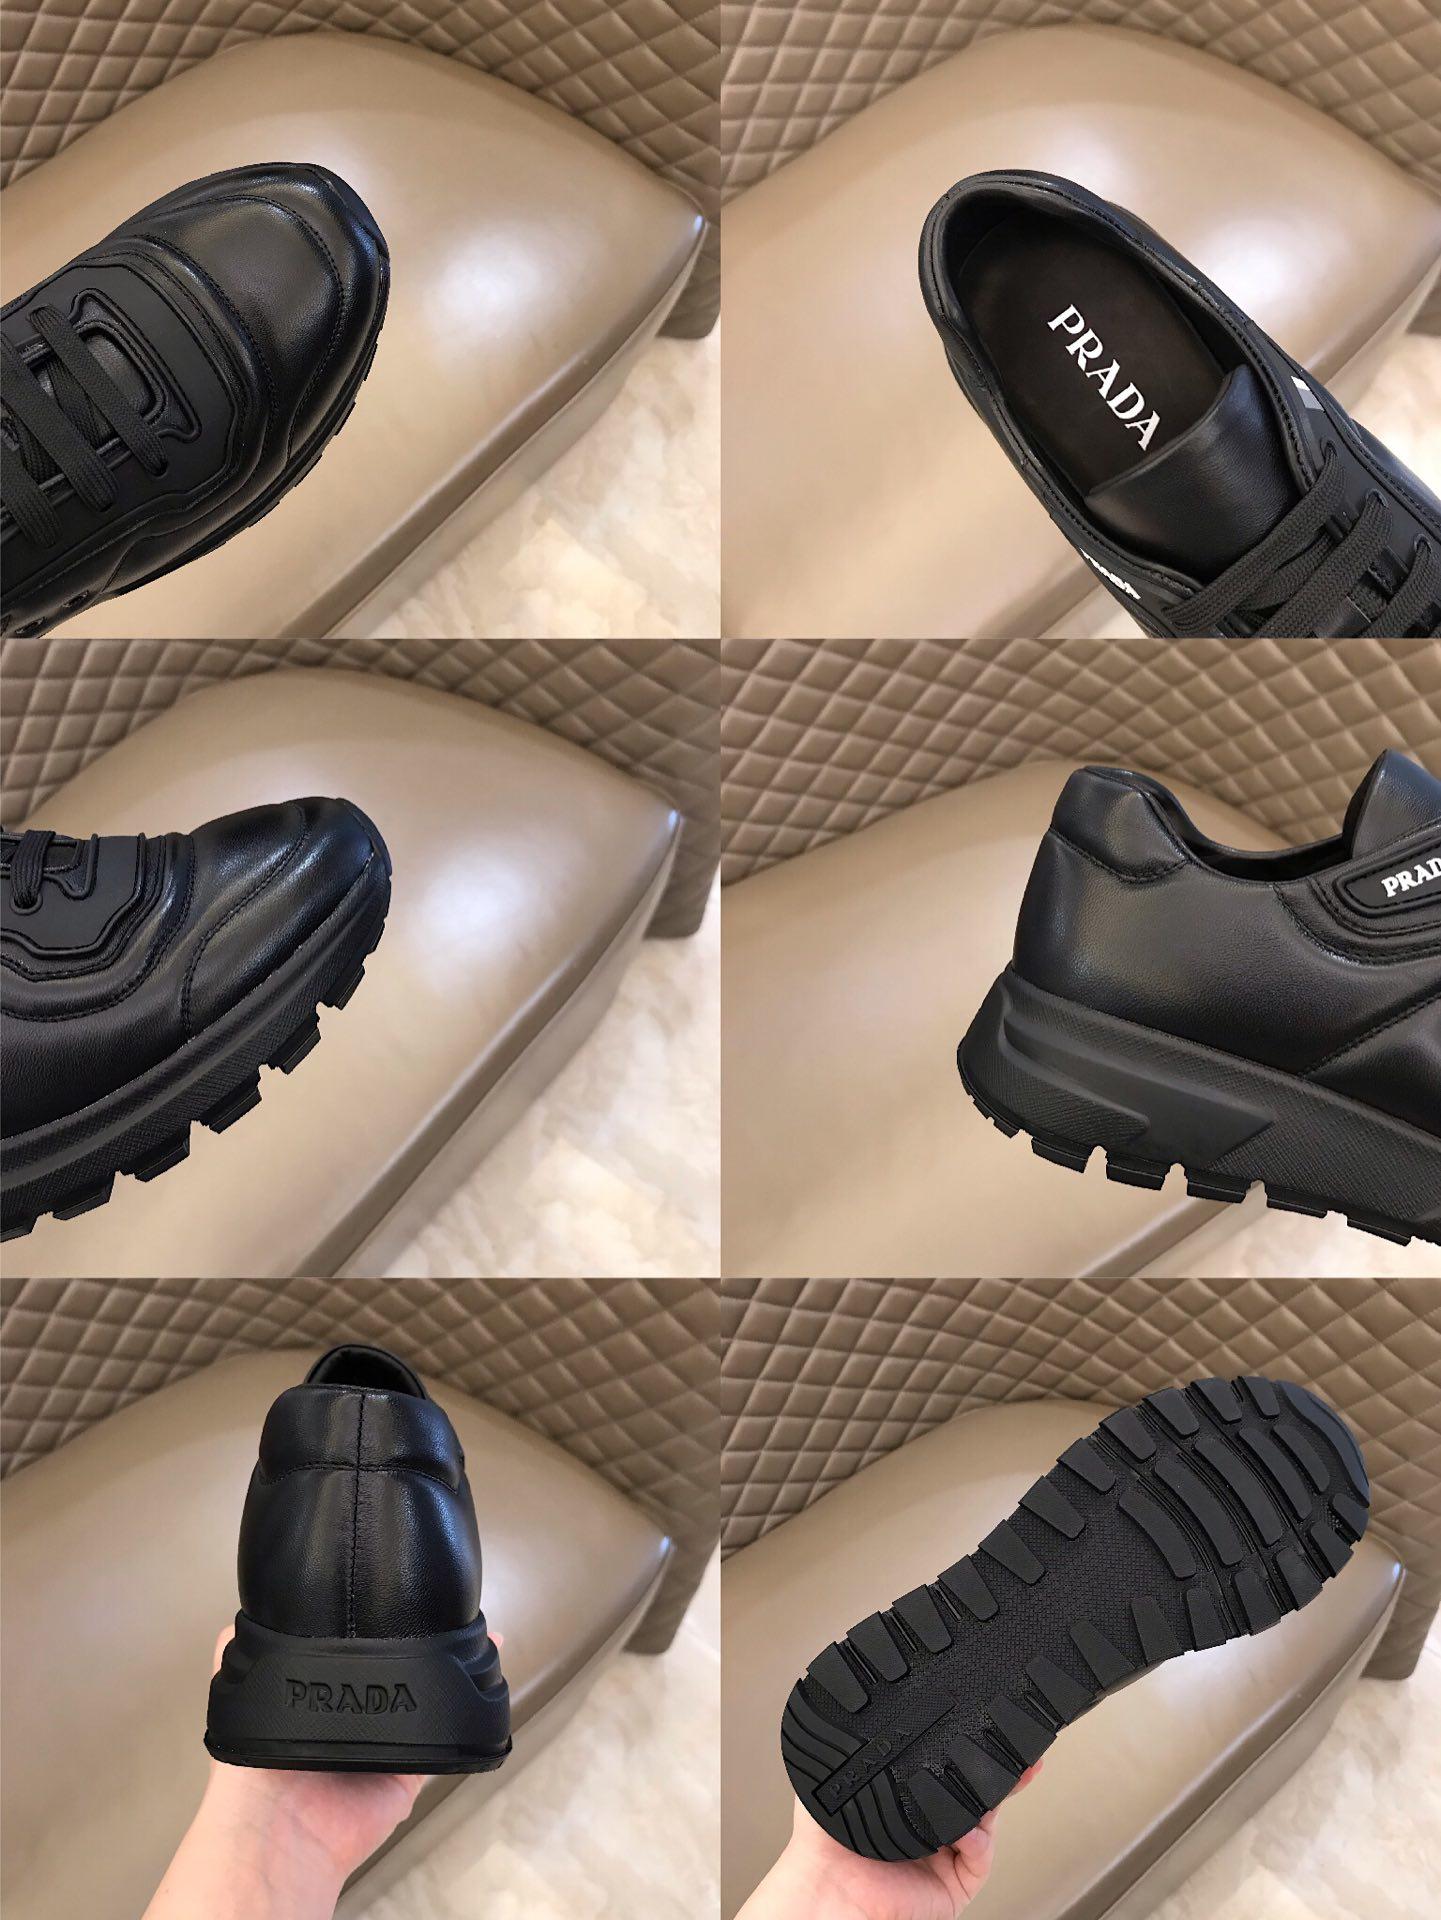 Prada Fashion Sneakers Black and black shoe soles MS02921